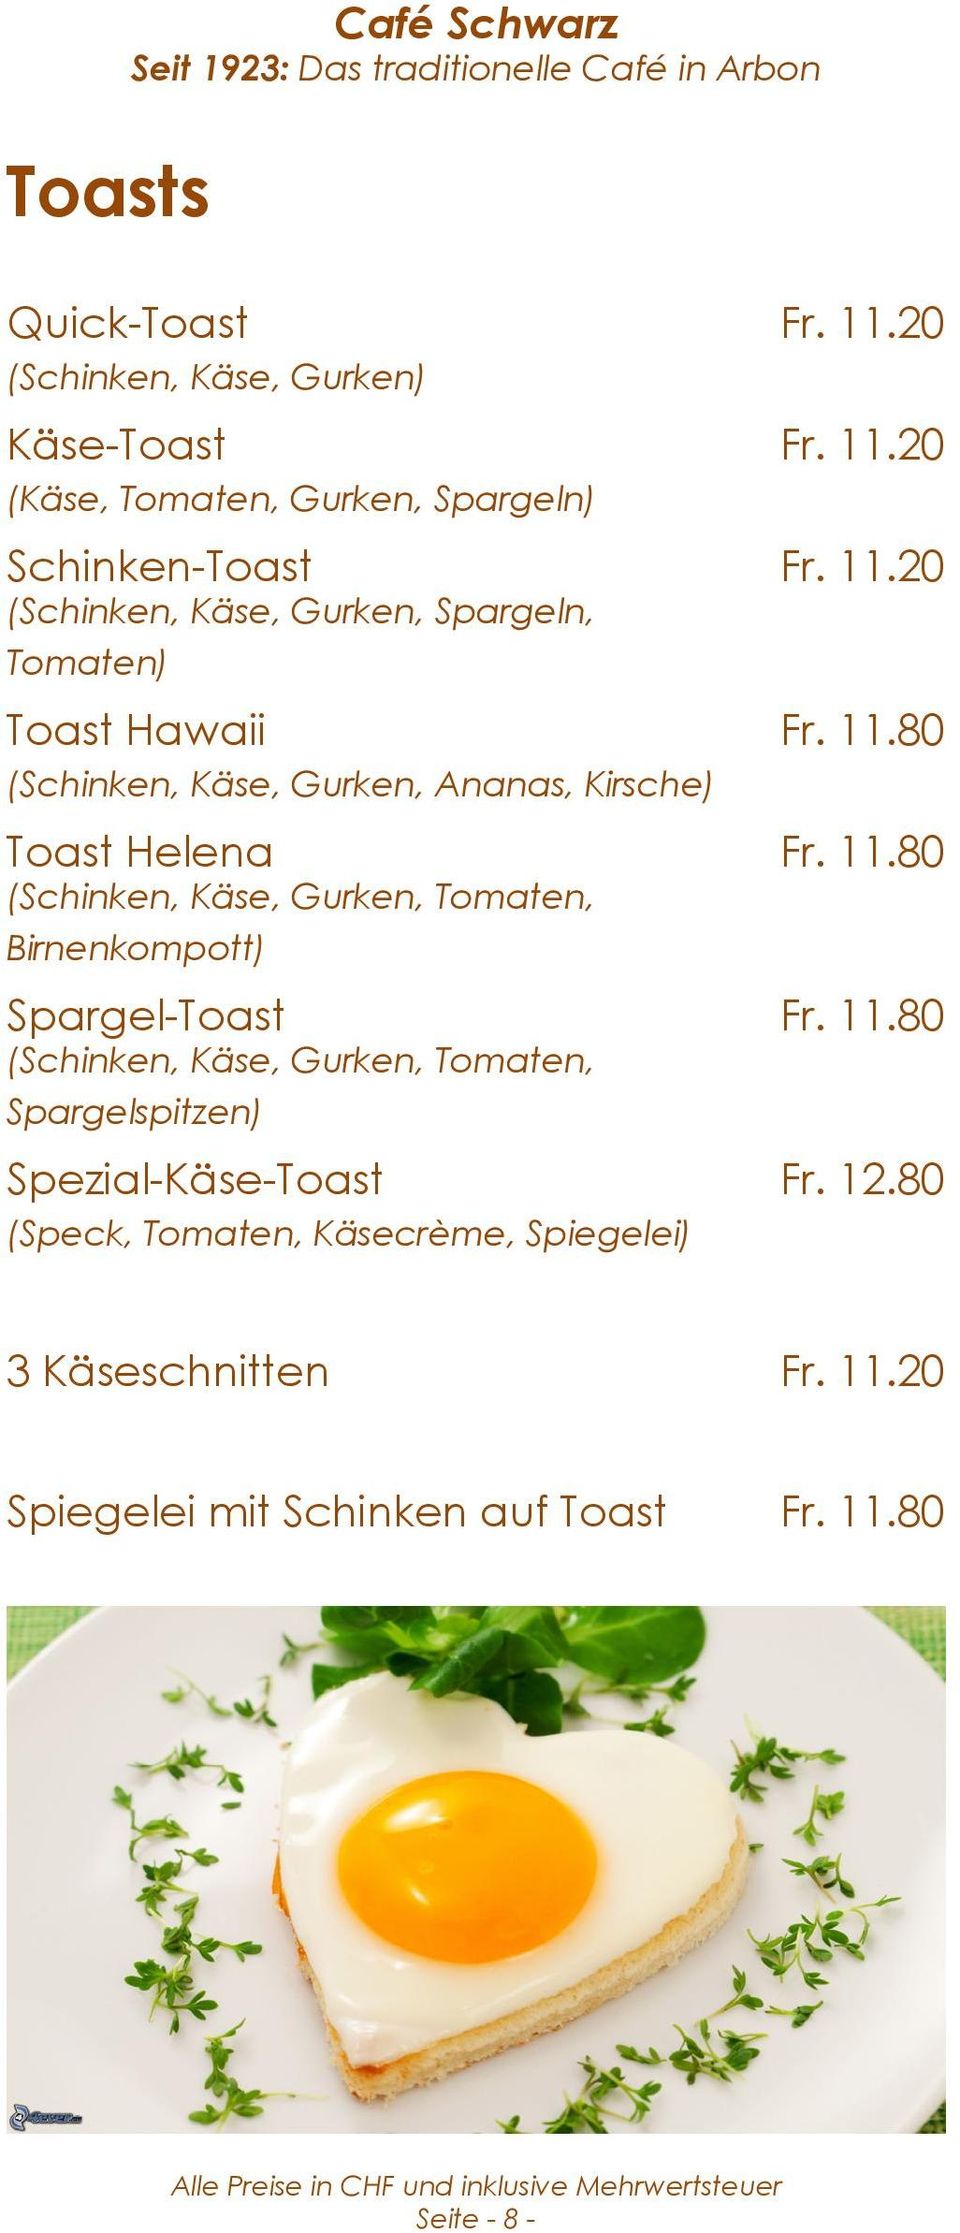 80 (Schinken, Käse, Gurken, Ananas, Kirsche) Toast Helena Fr. 11.